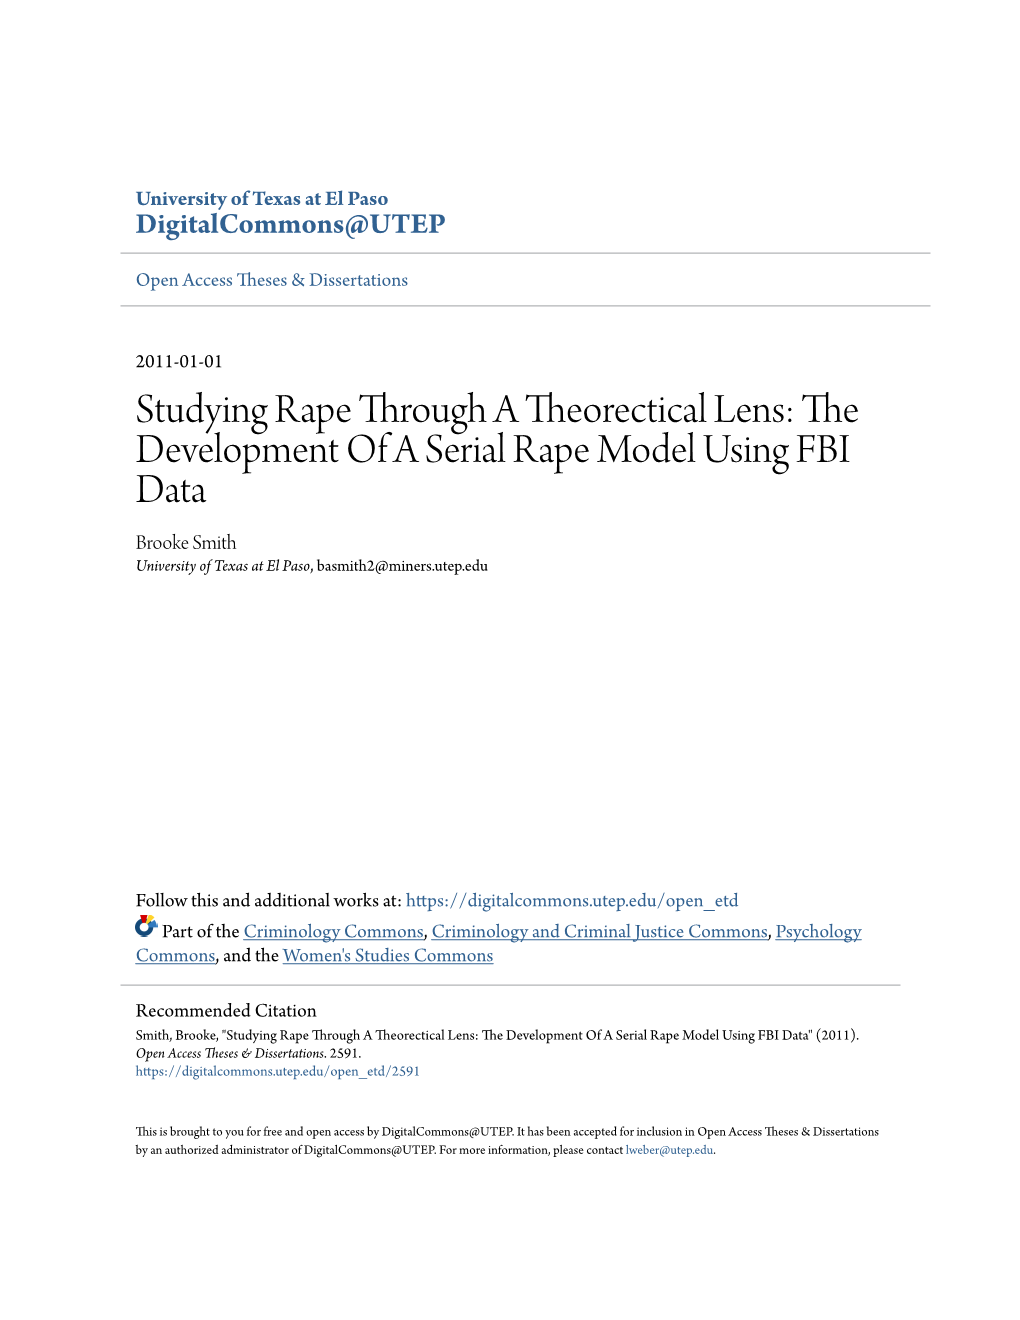 The Development of a Serial Rape Model Using FBI Data Brooke Smith University of Texas at El Paso, Basmith2@Miners.Utep.Edu